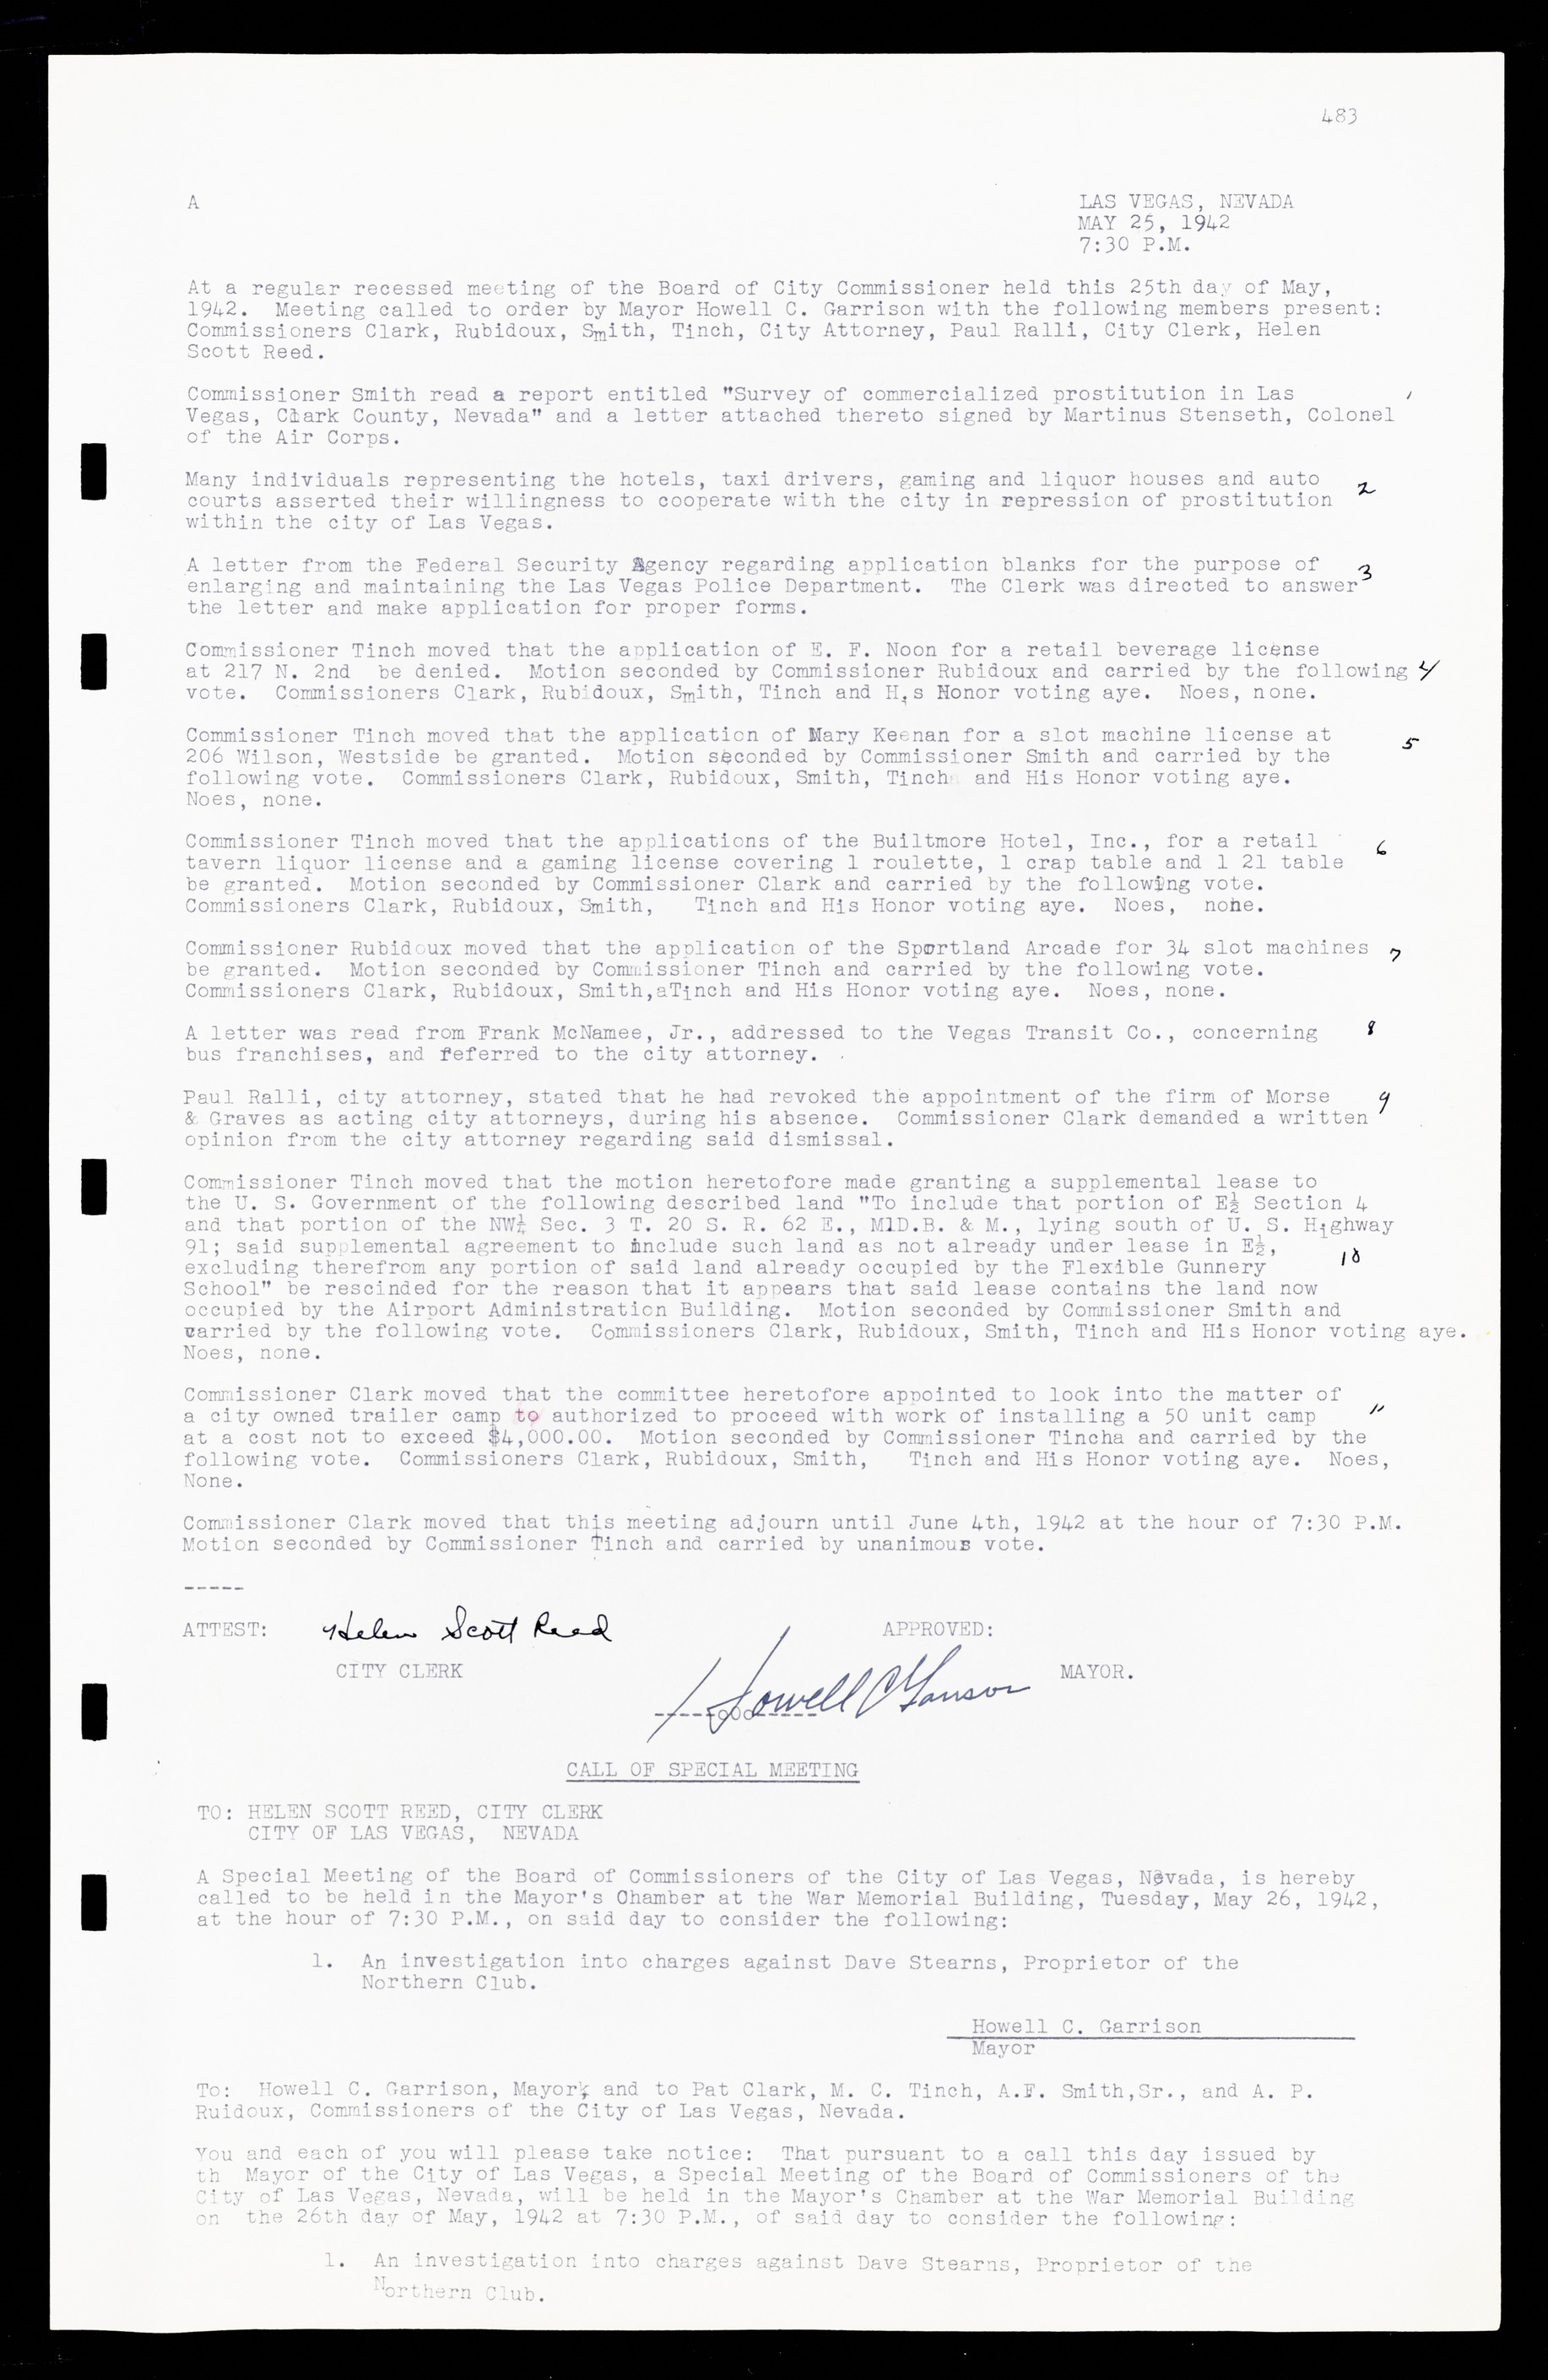 Las Vegas City Commission Minutes, February 17, 1937 to August 4, 1942, lvc000004-511